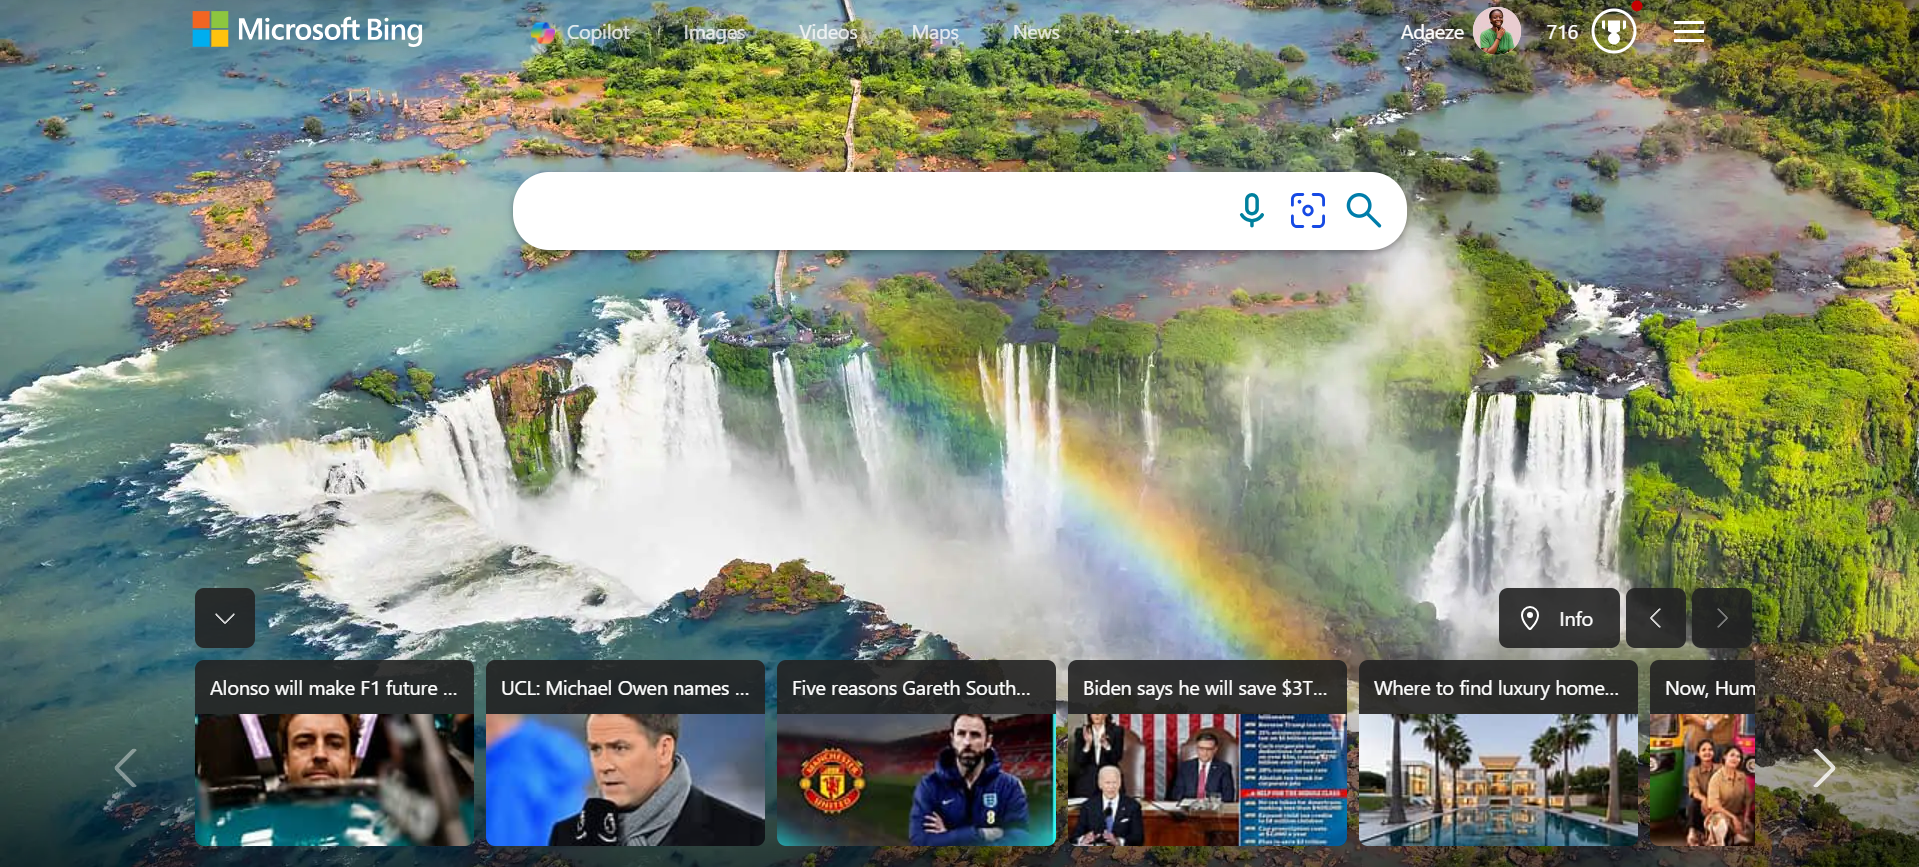 The Microsoft Bing Search Engine Homepage